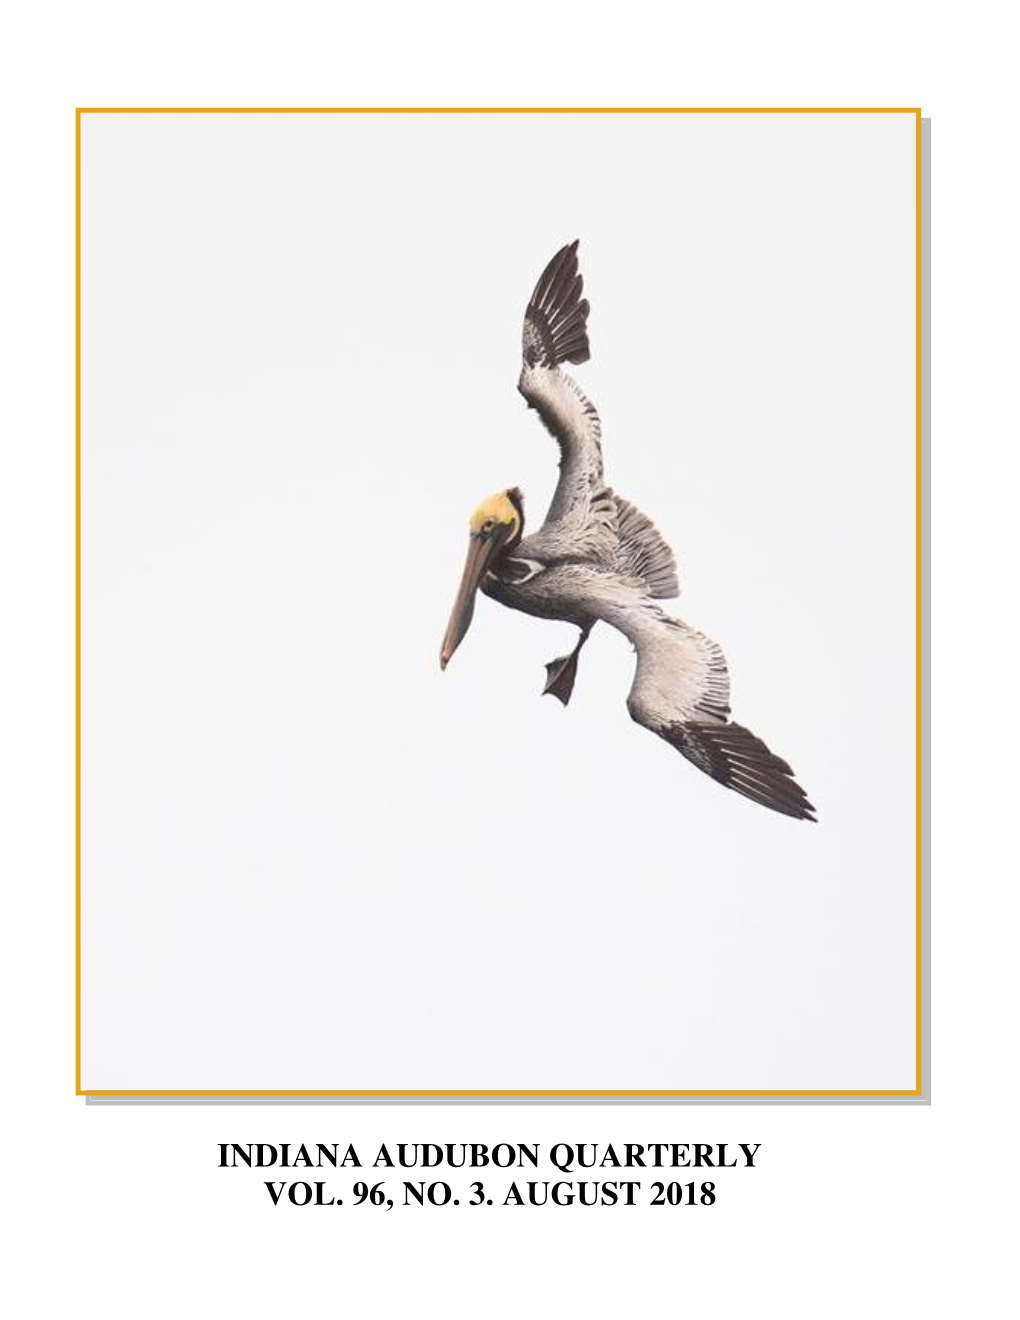 A History of Mary Gray Bird Sanctuary Carl Wilms………………………...………………………………….………